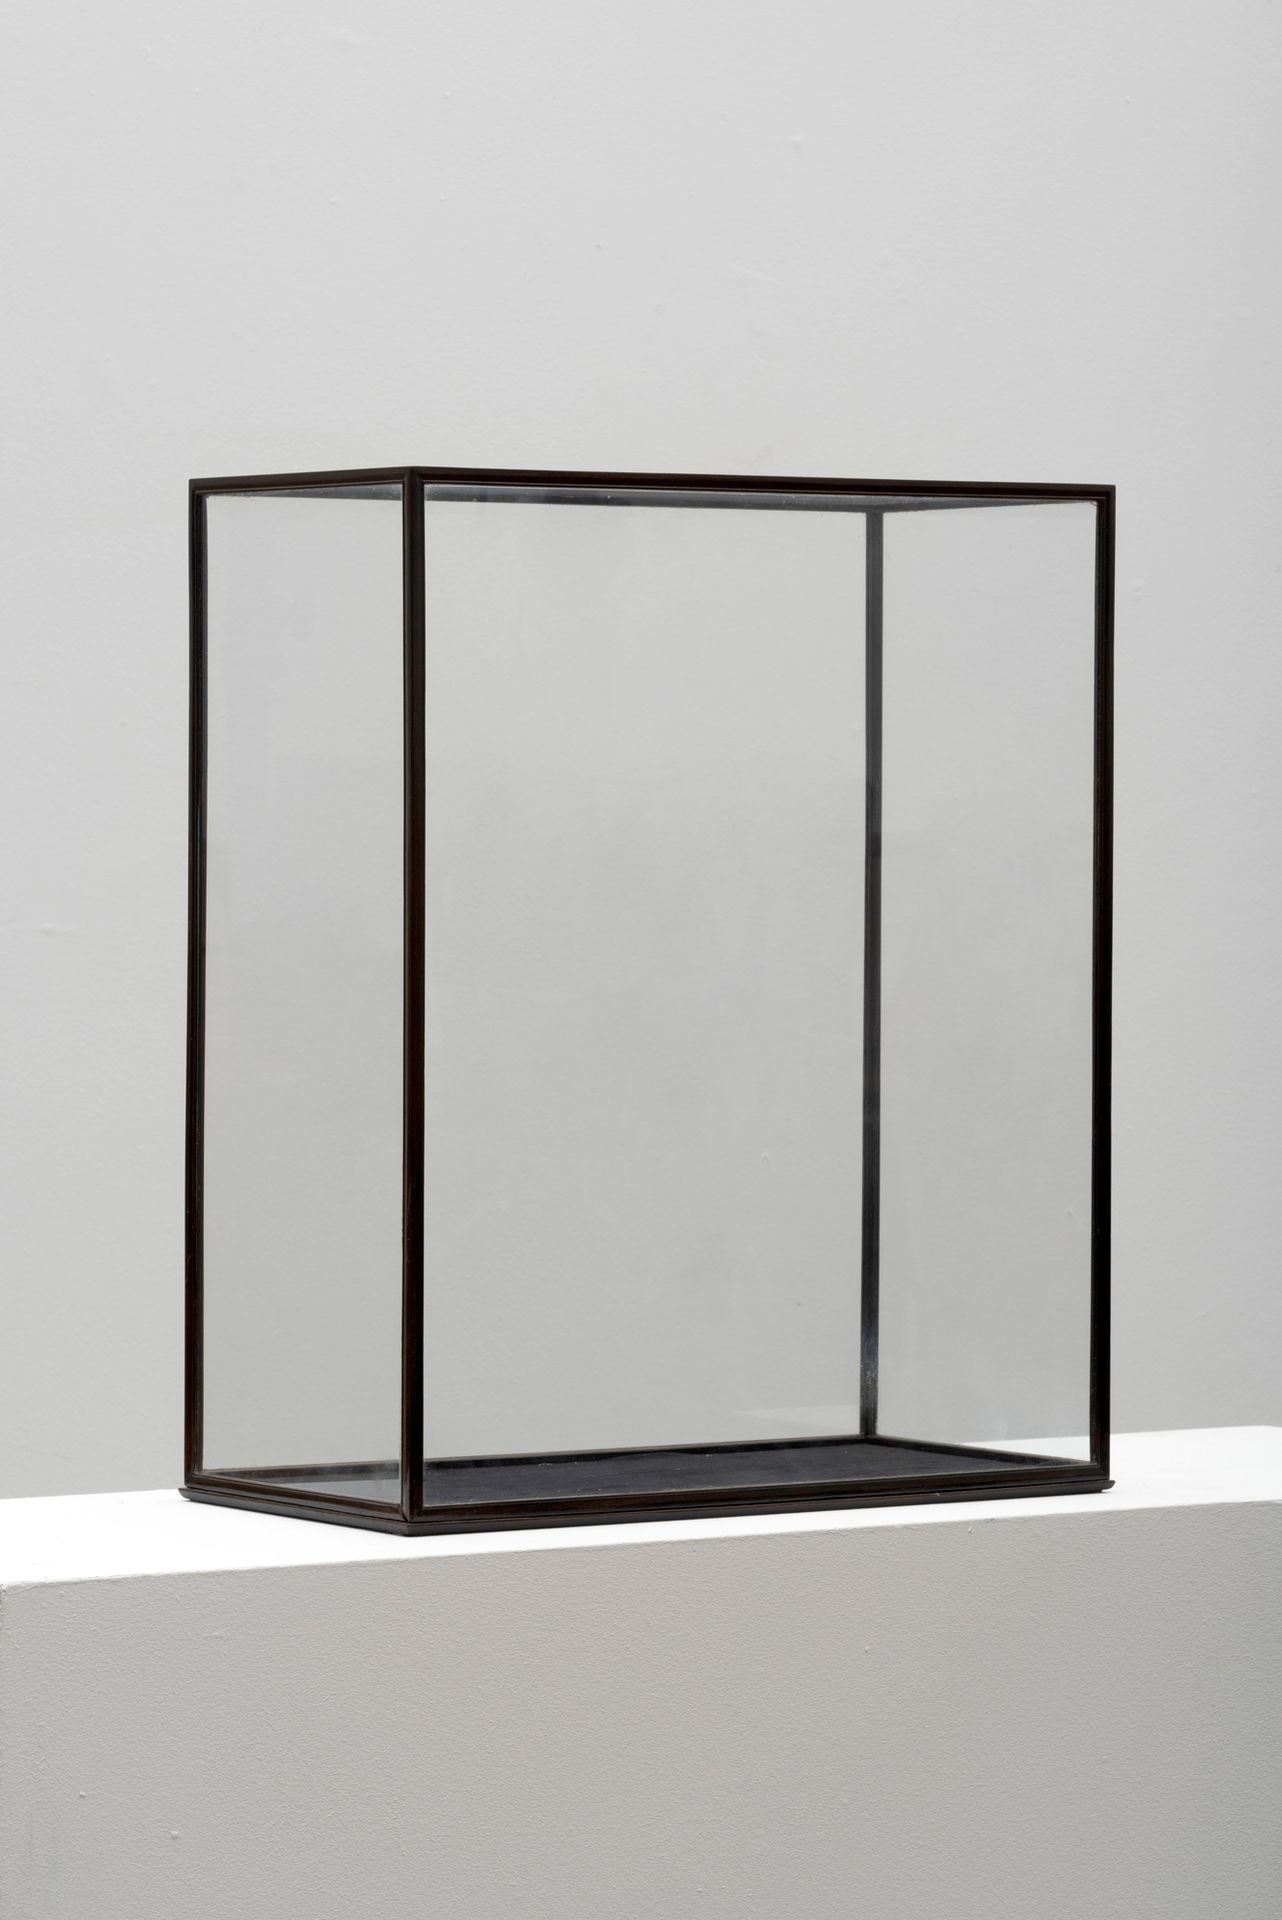 Null 玻璃和木头 VITRINE
19世纪。
高60,5厘米，宽51厘米，深25,5厘米
出处：
前René Withofs收藏。